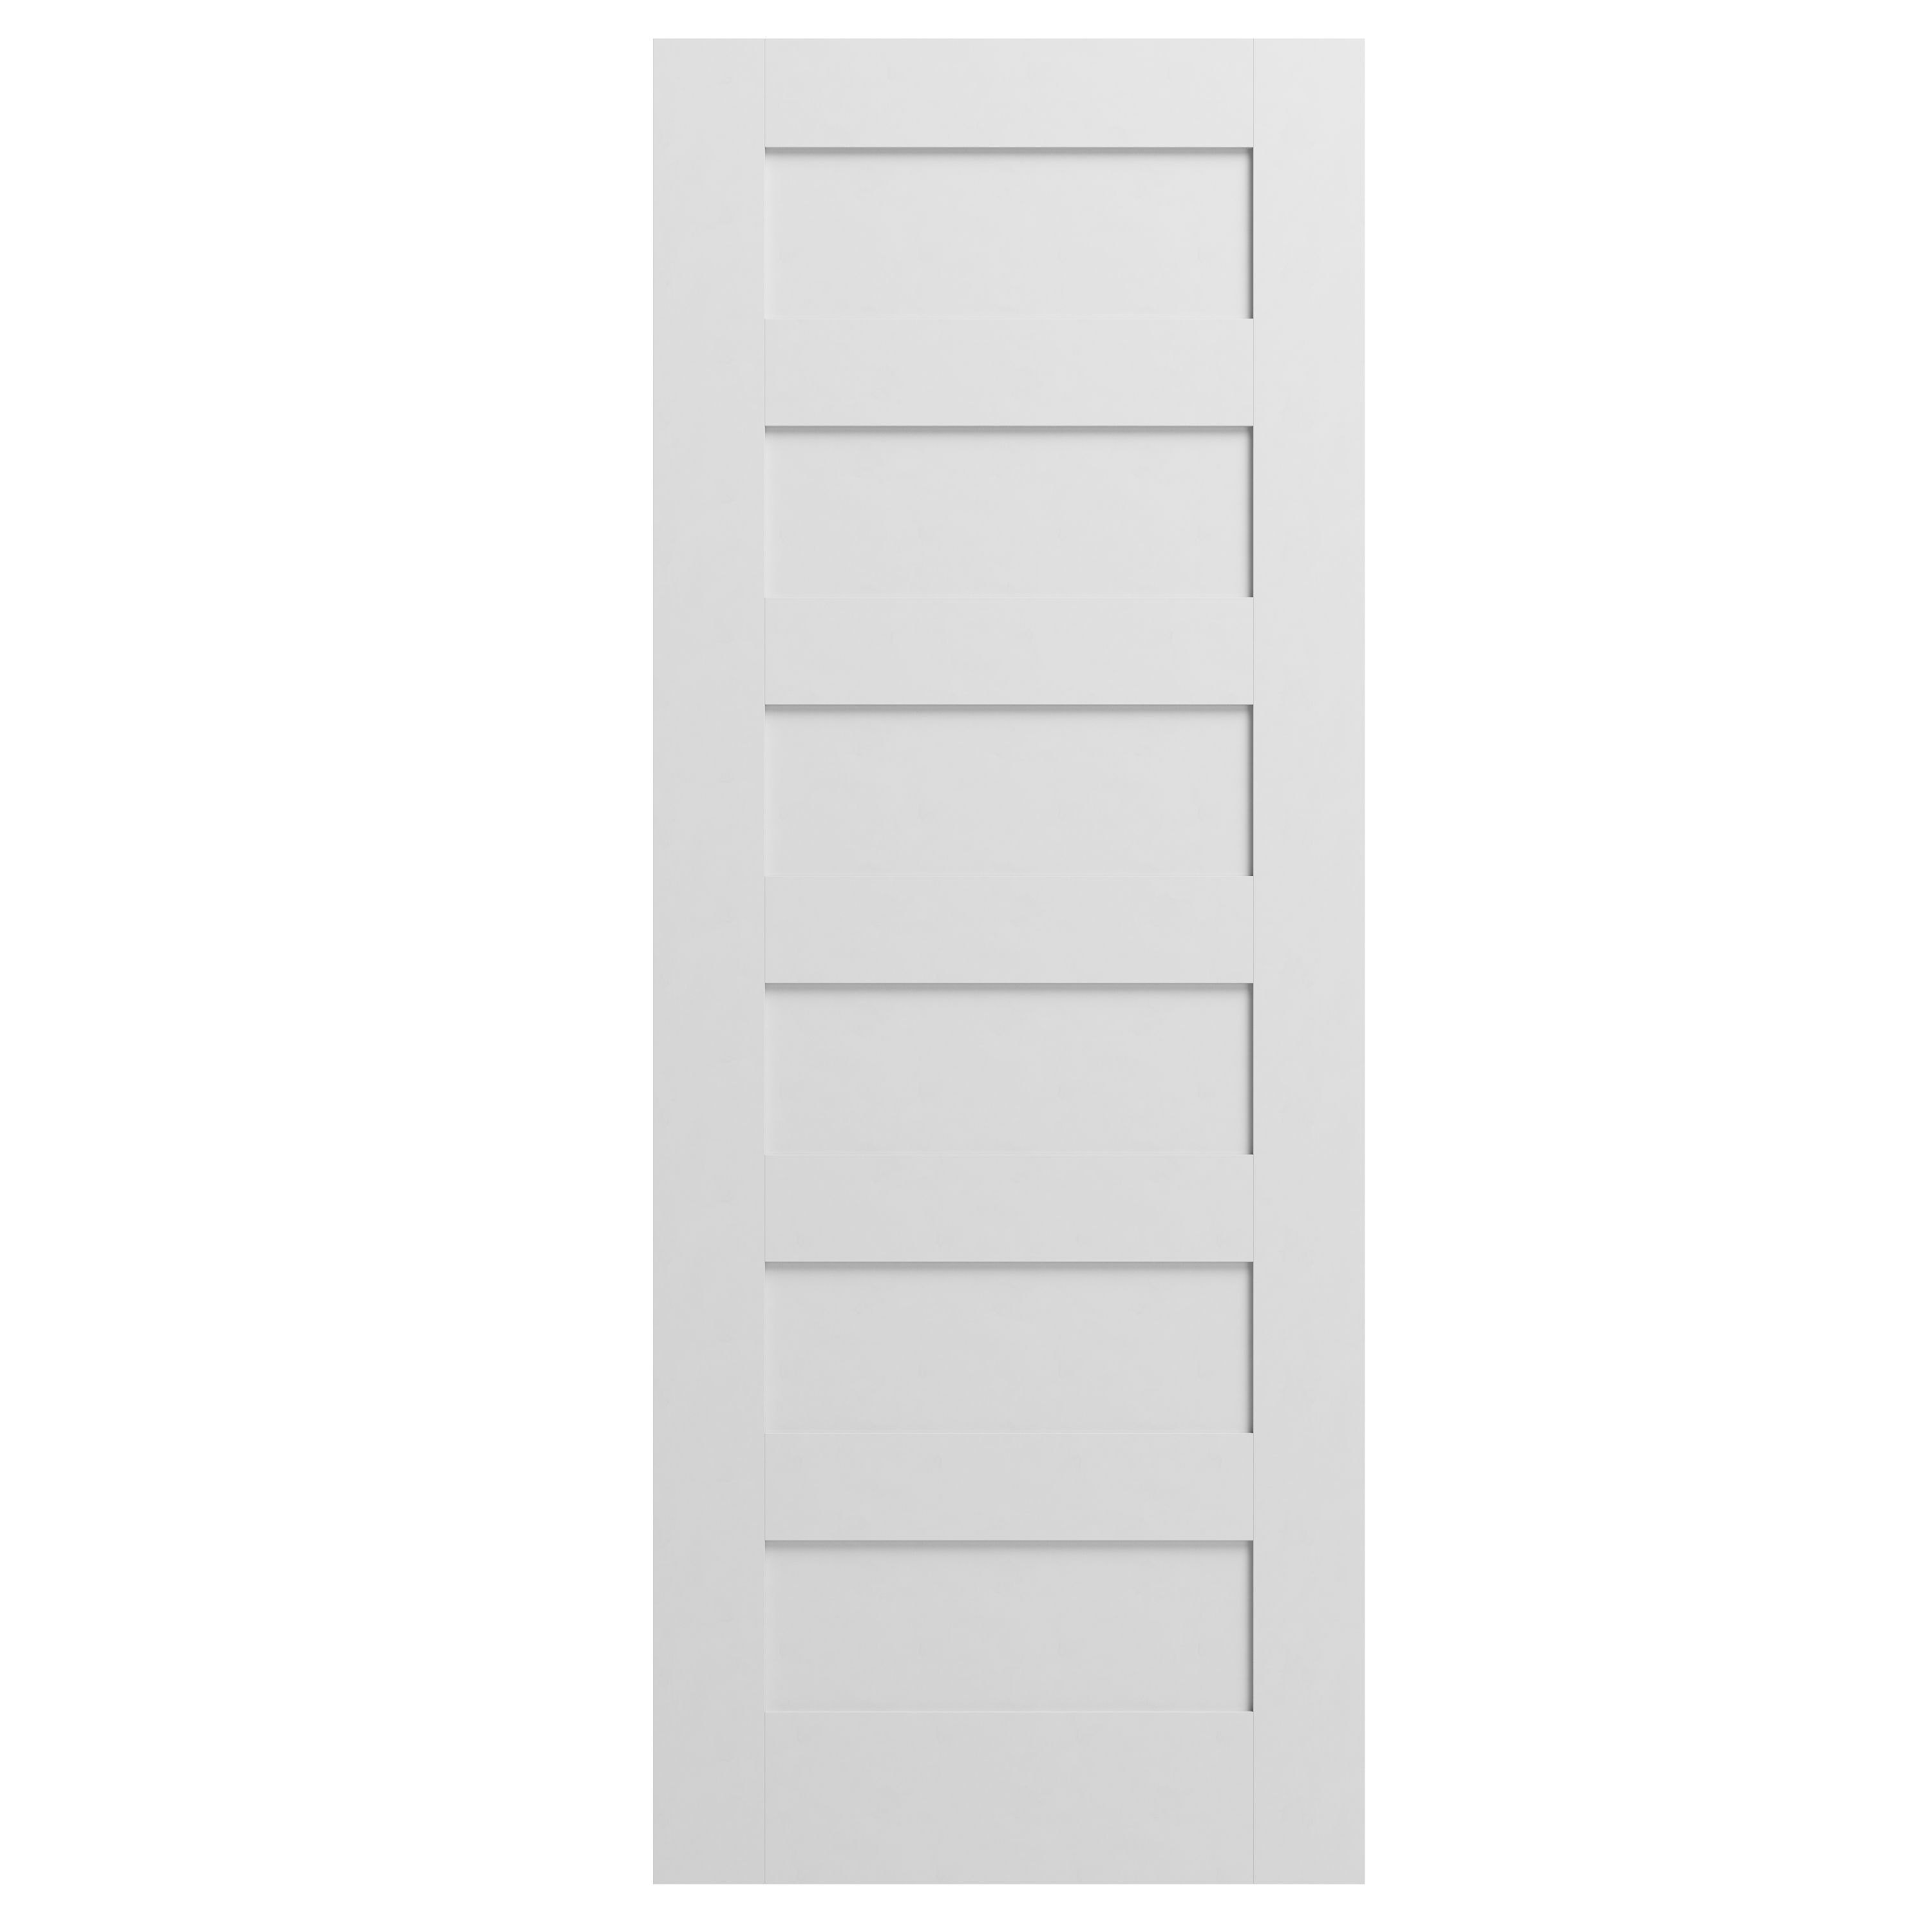 Geom 6 panel Unglazed Shaker White Internal Door, (H)1981mm (W)610mm (T)35mm